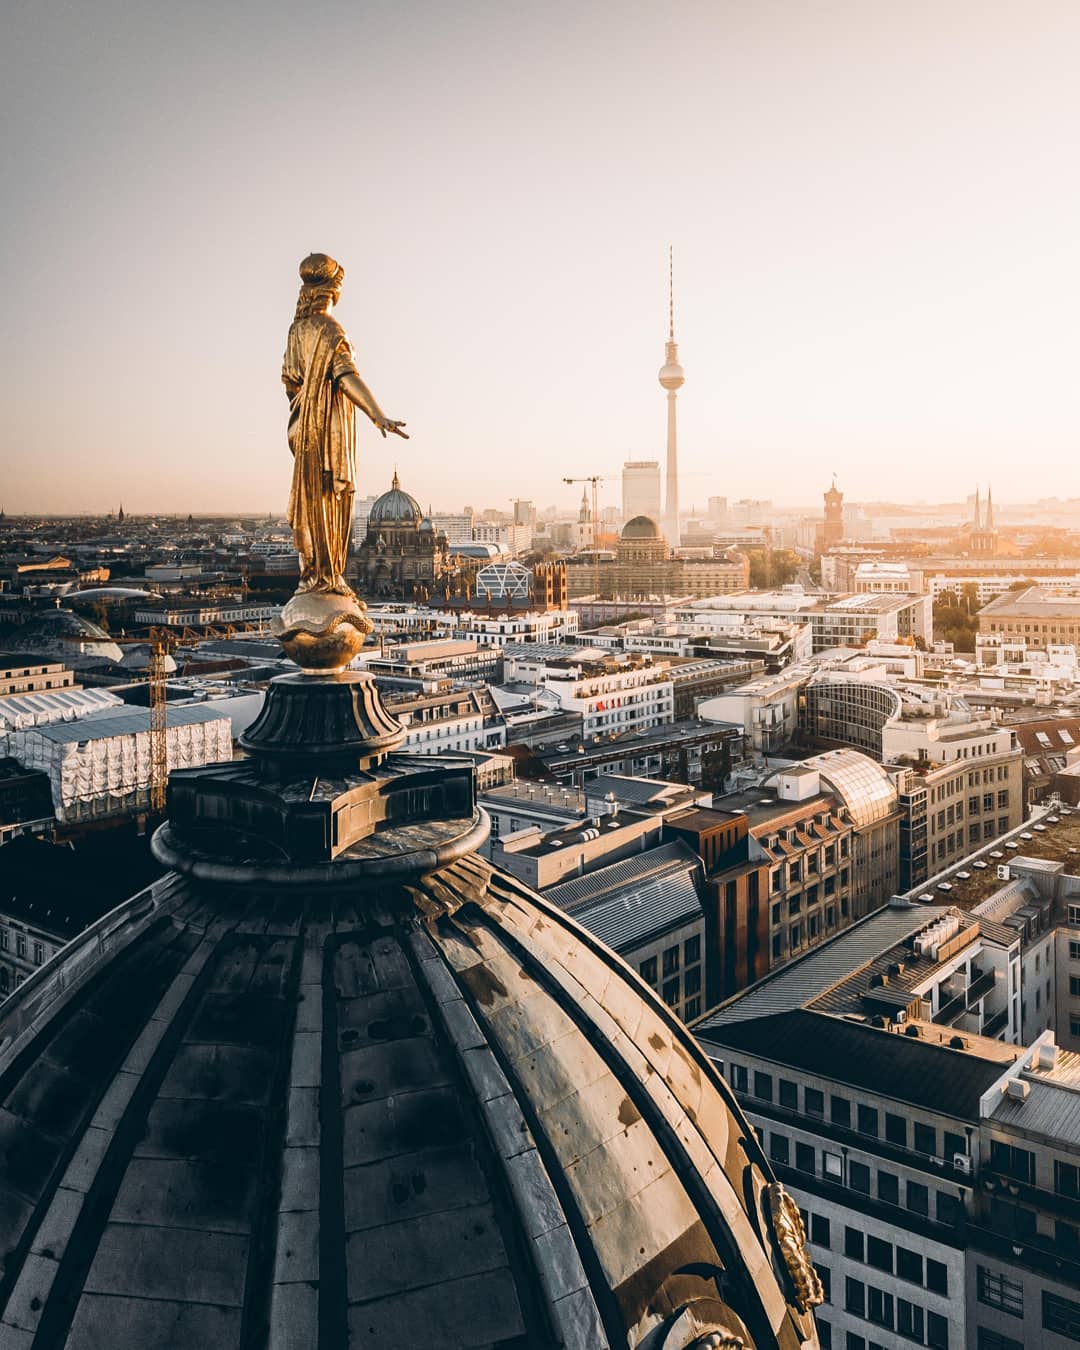 Skyline of Berlin gold statue on church. Photo by Instagram user @ferditakesphotos